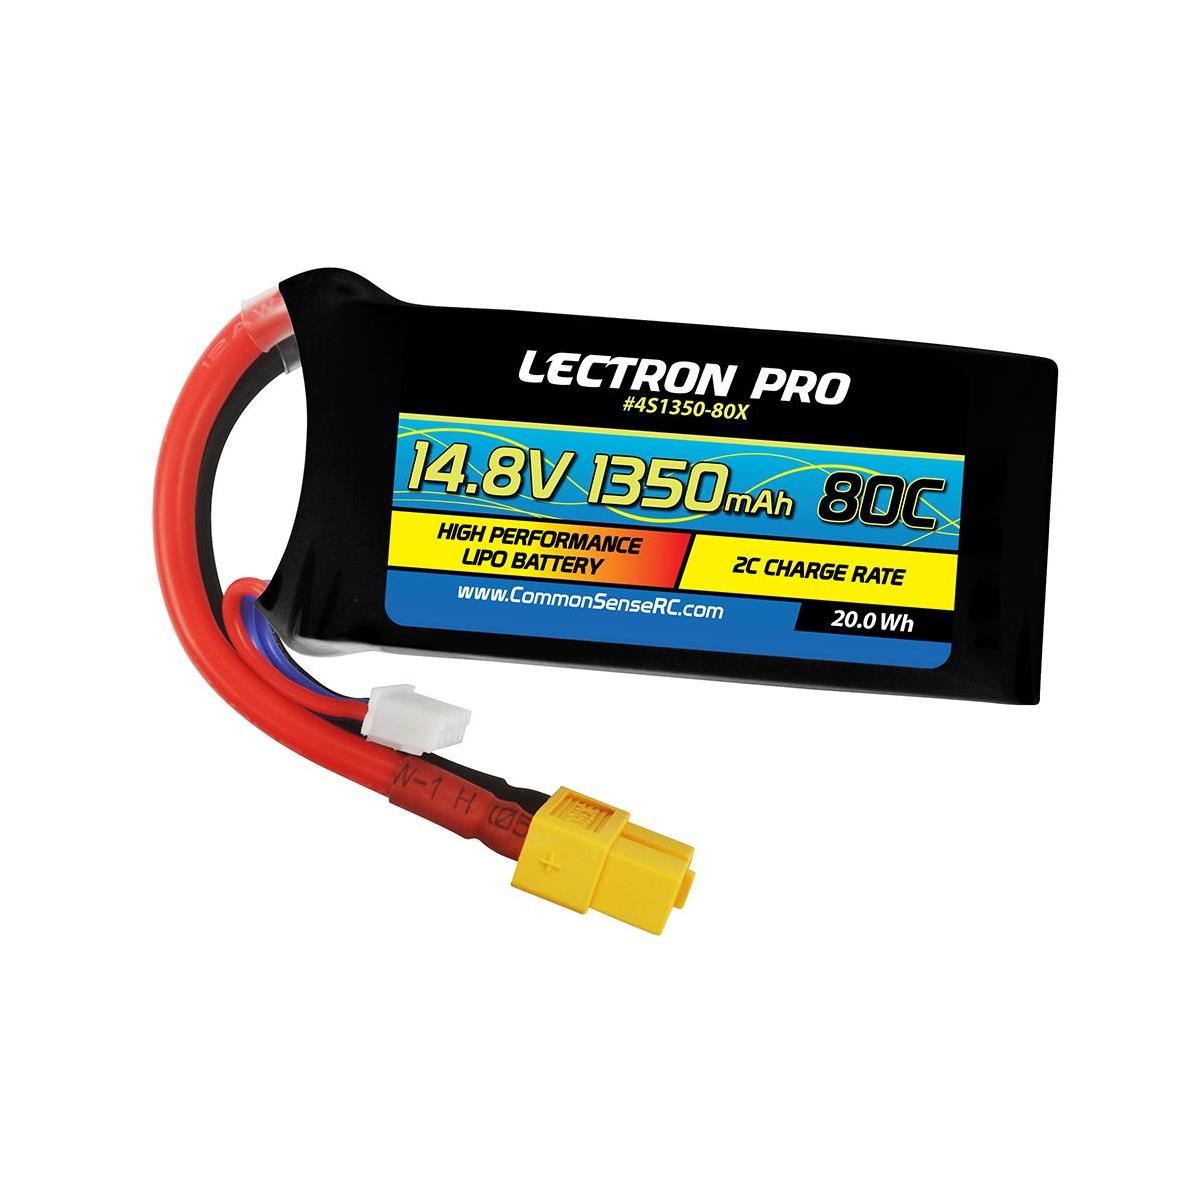 COMMON SENSE RC Lectron Pro 14.8V 1350mAh 80C Li-Po Battery with XT60 Connector -  4S1350-80X